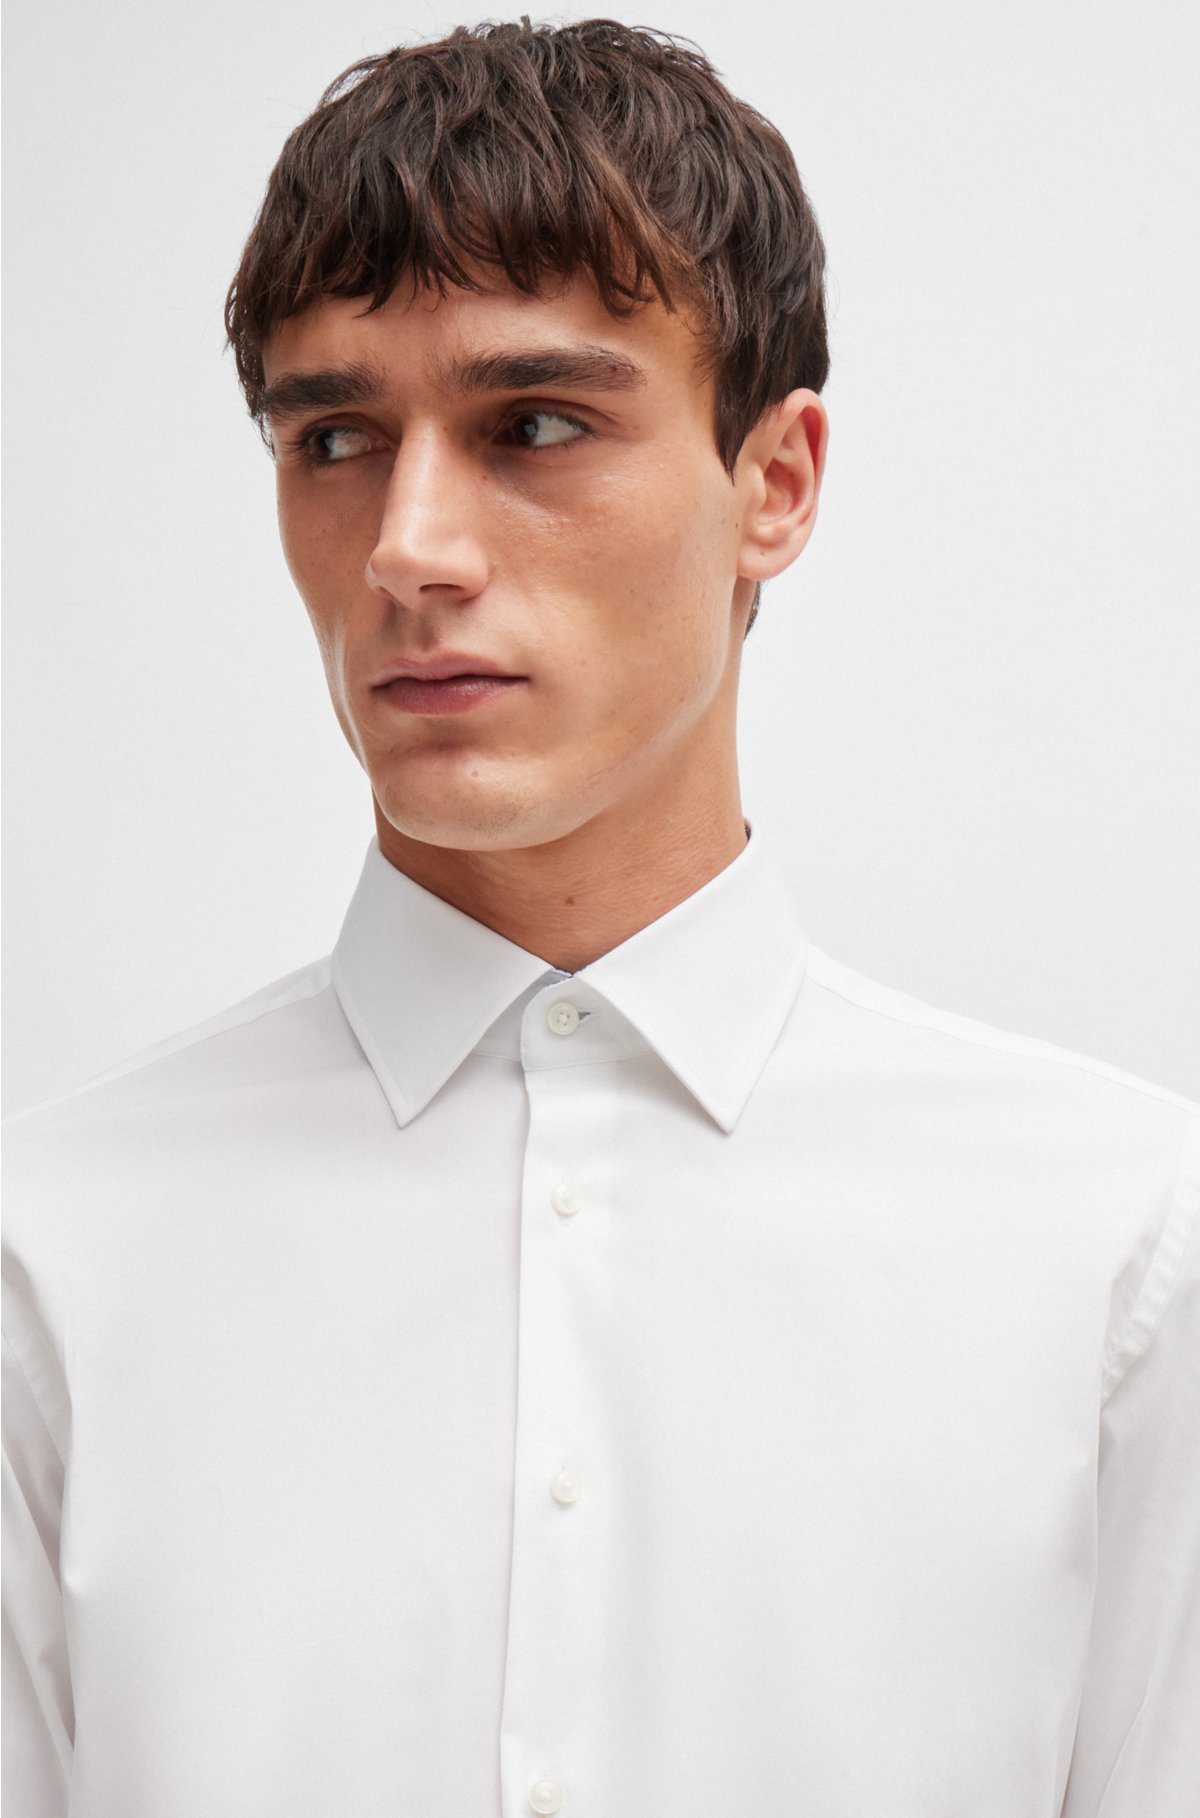 Regular-fit shirt in easy-iron stretch-cotton poplin, White